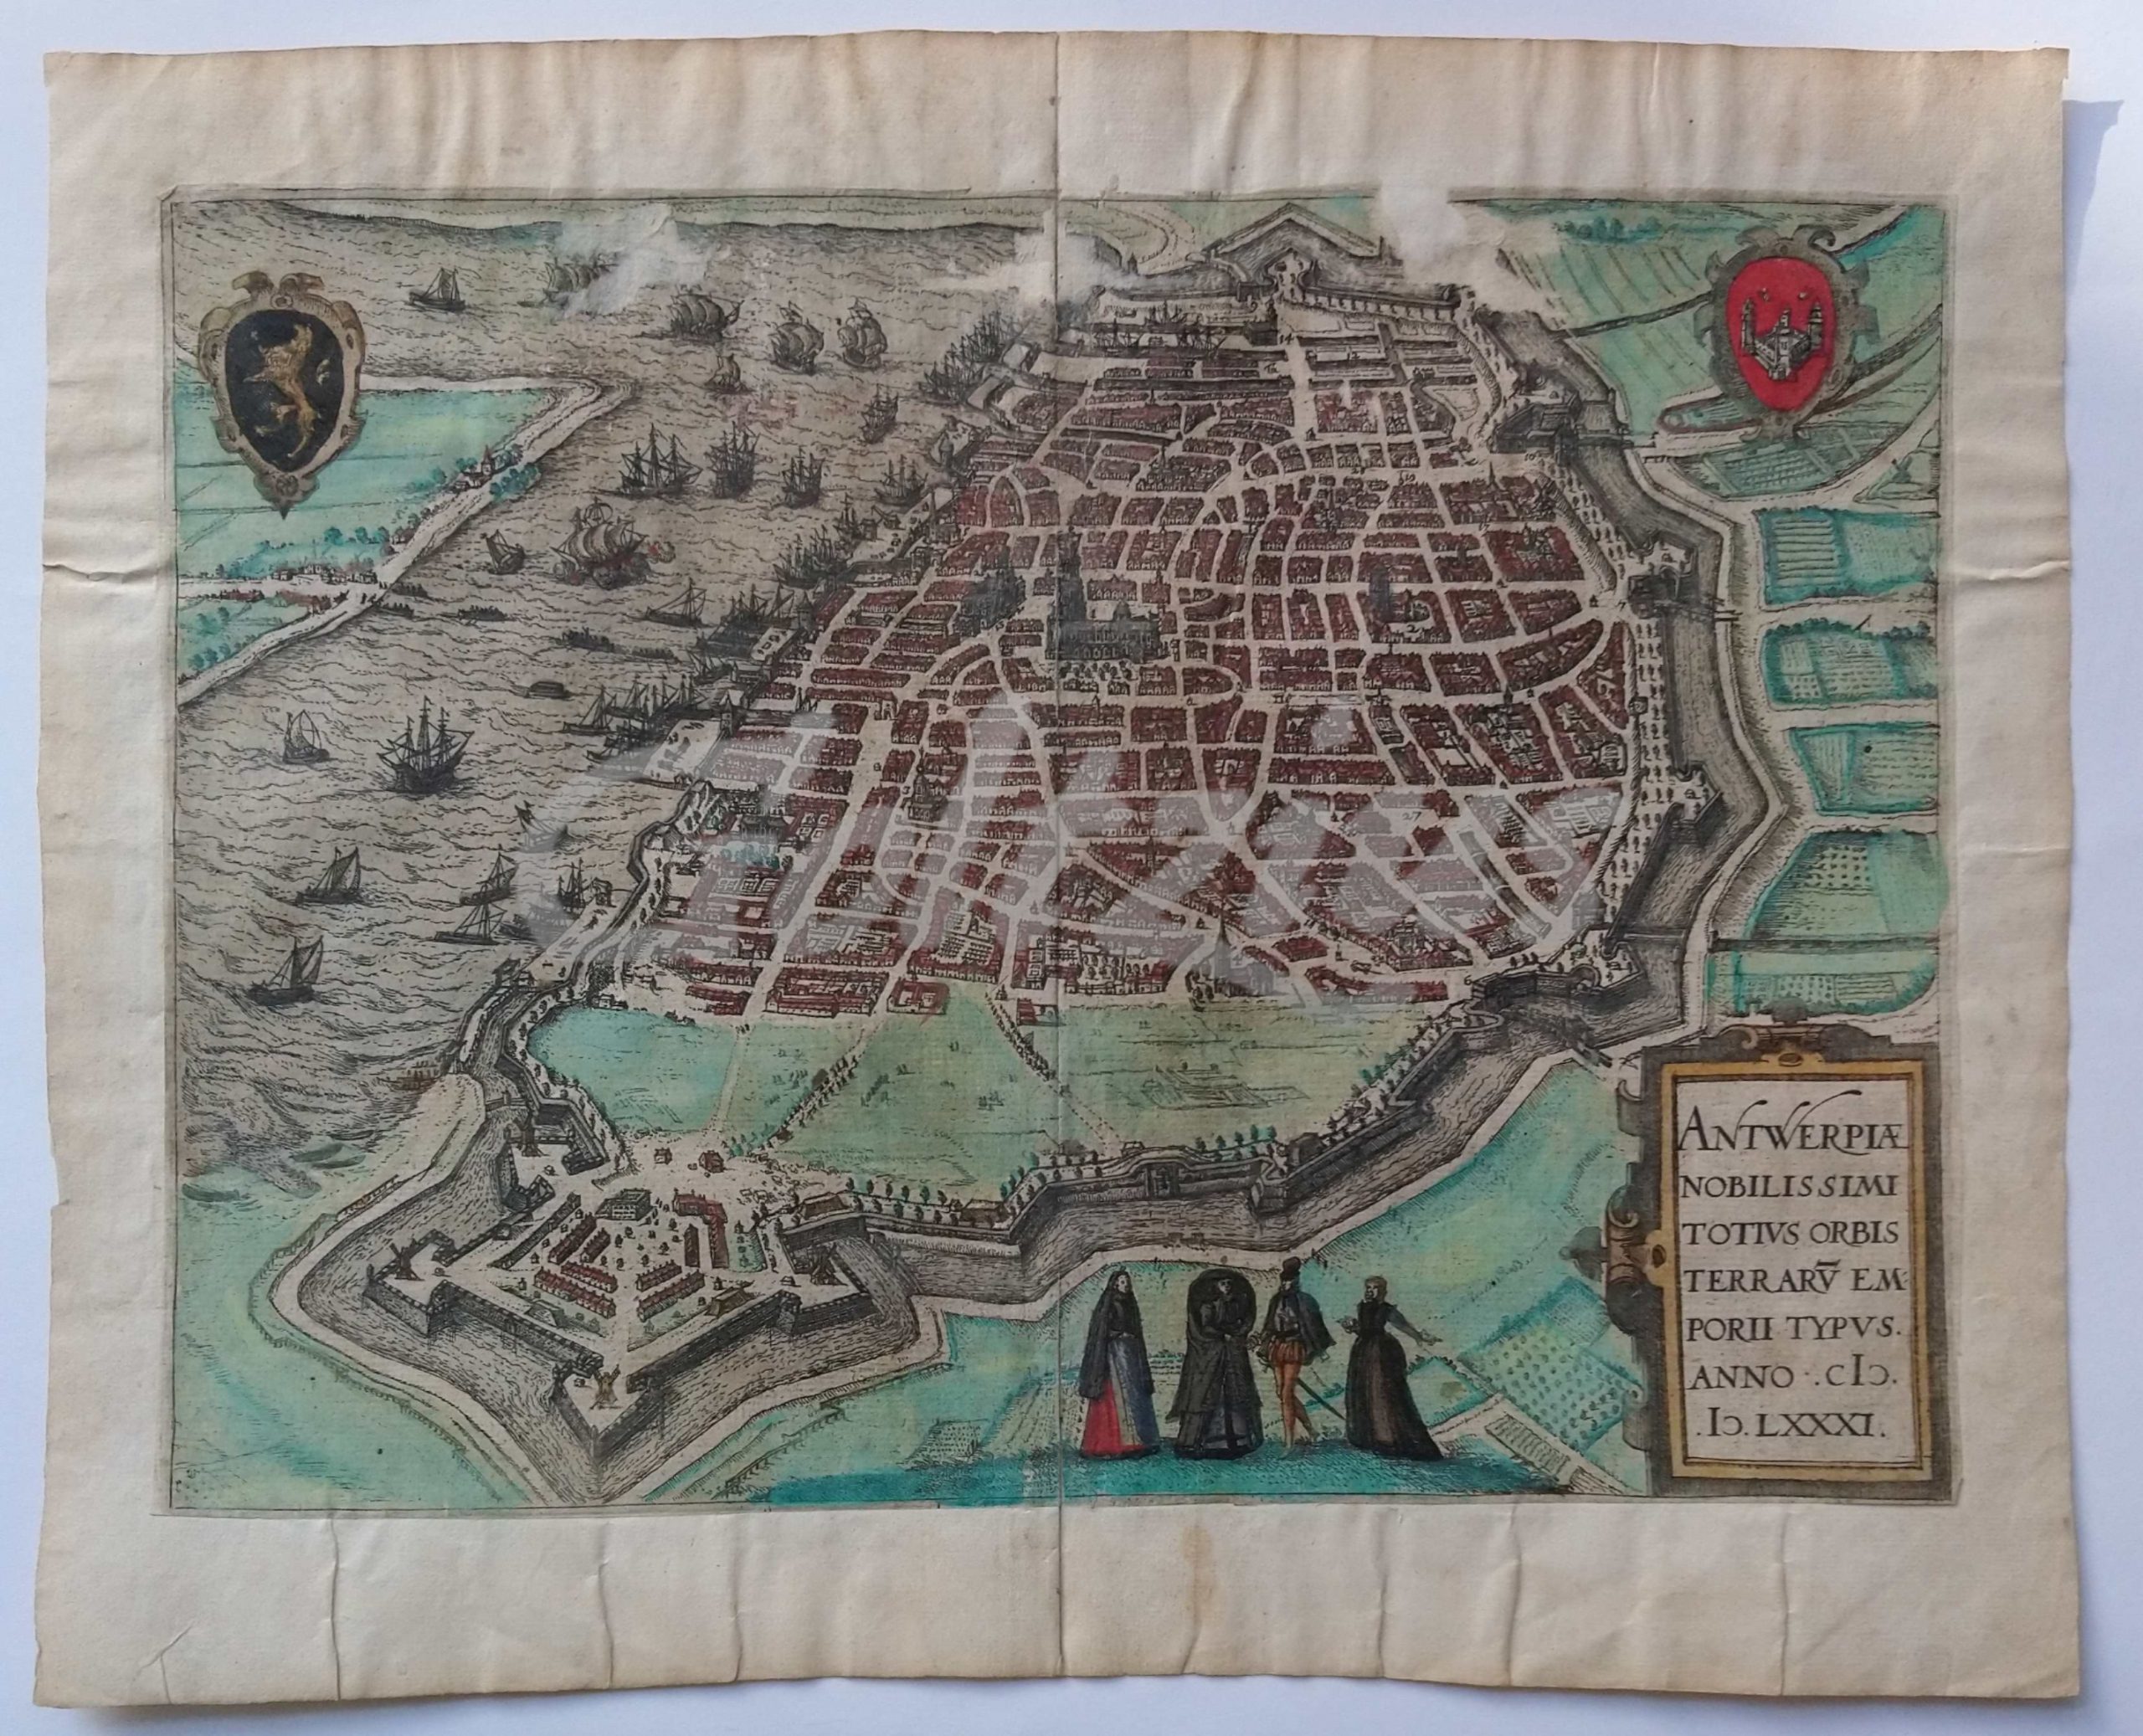 GUICCIARDINI, LUDOVICO, Bird's eye map of Antwerp